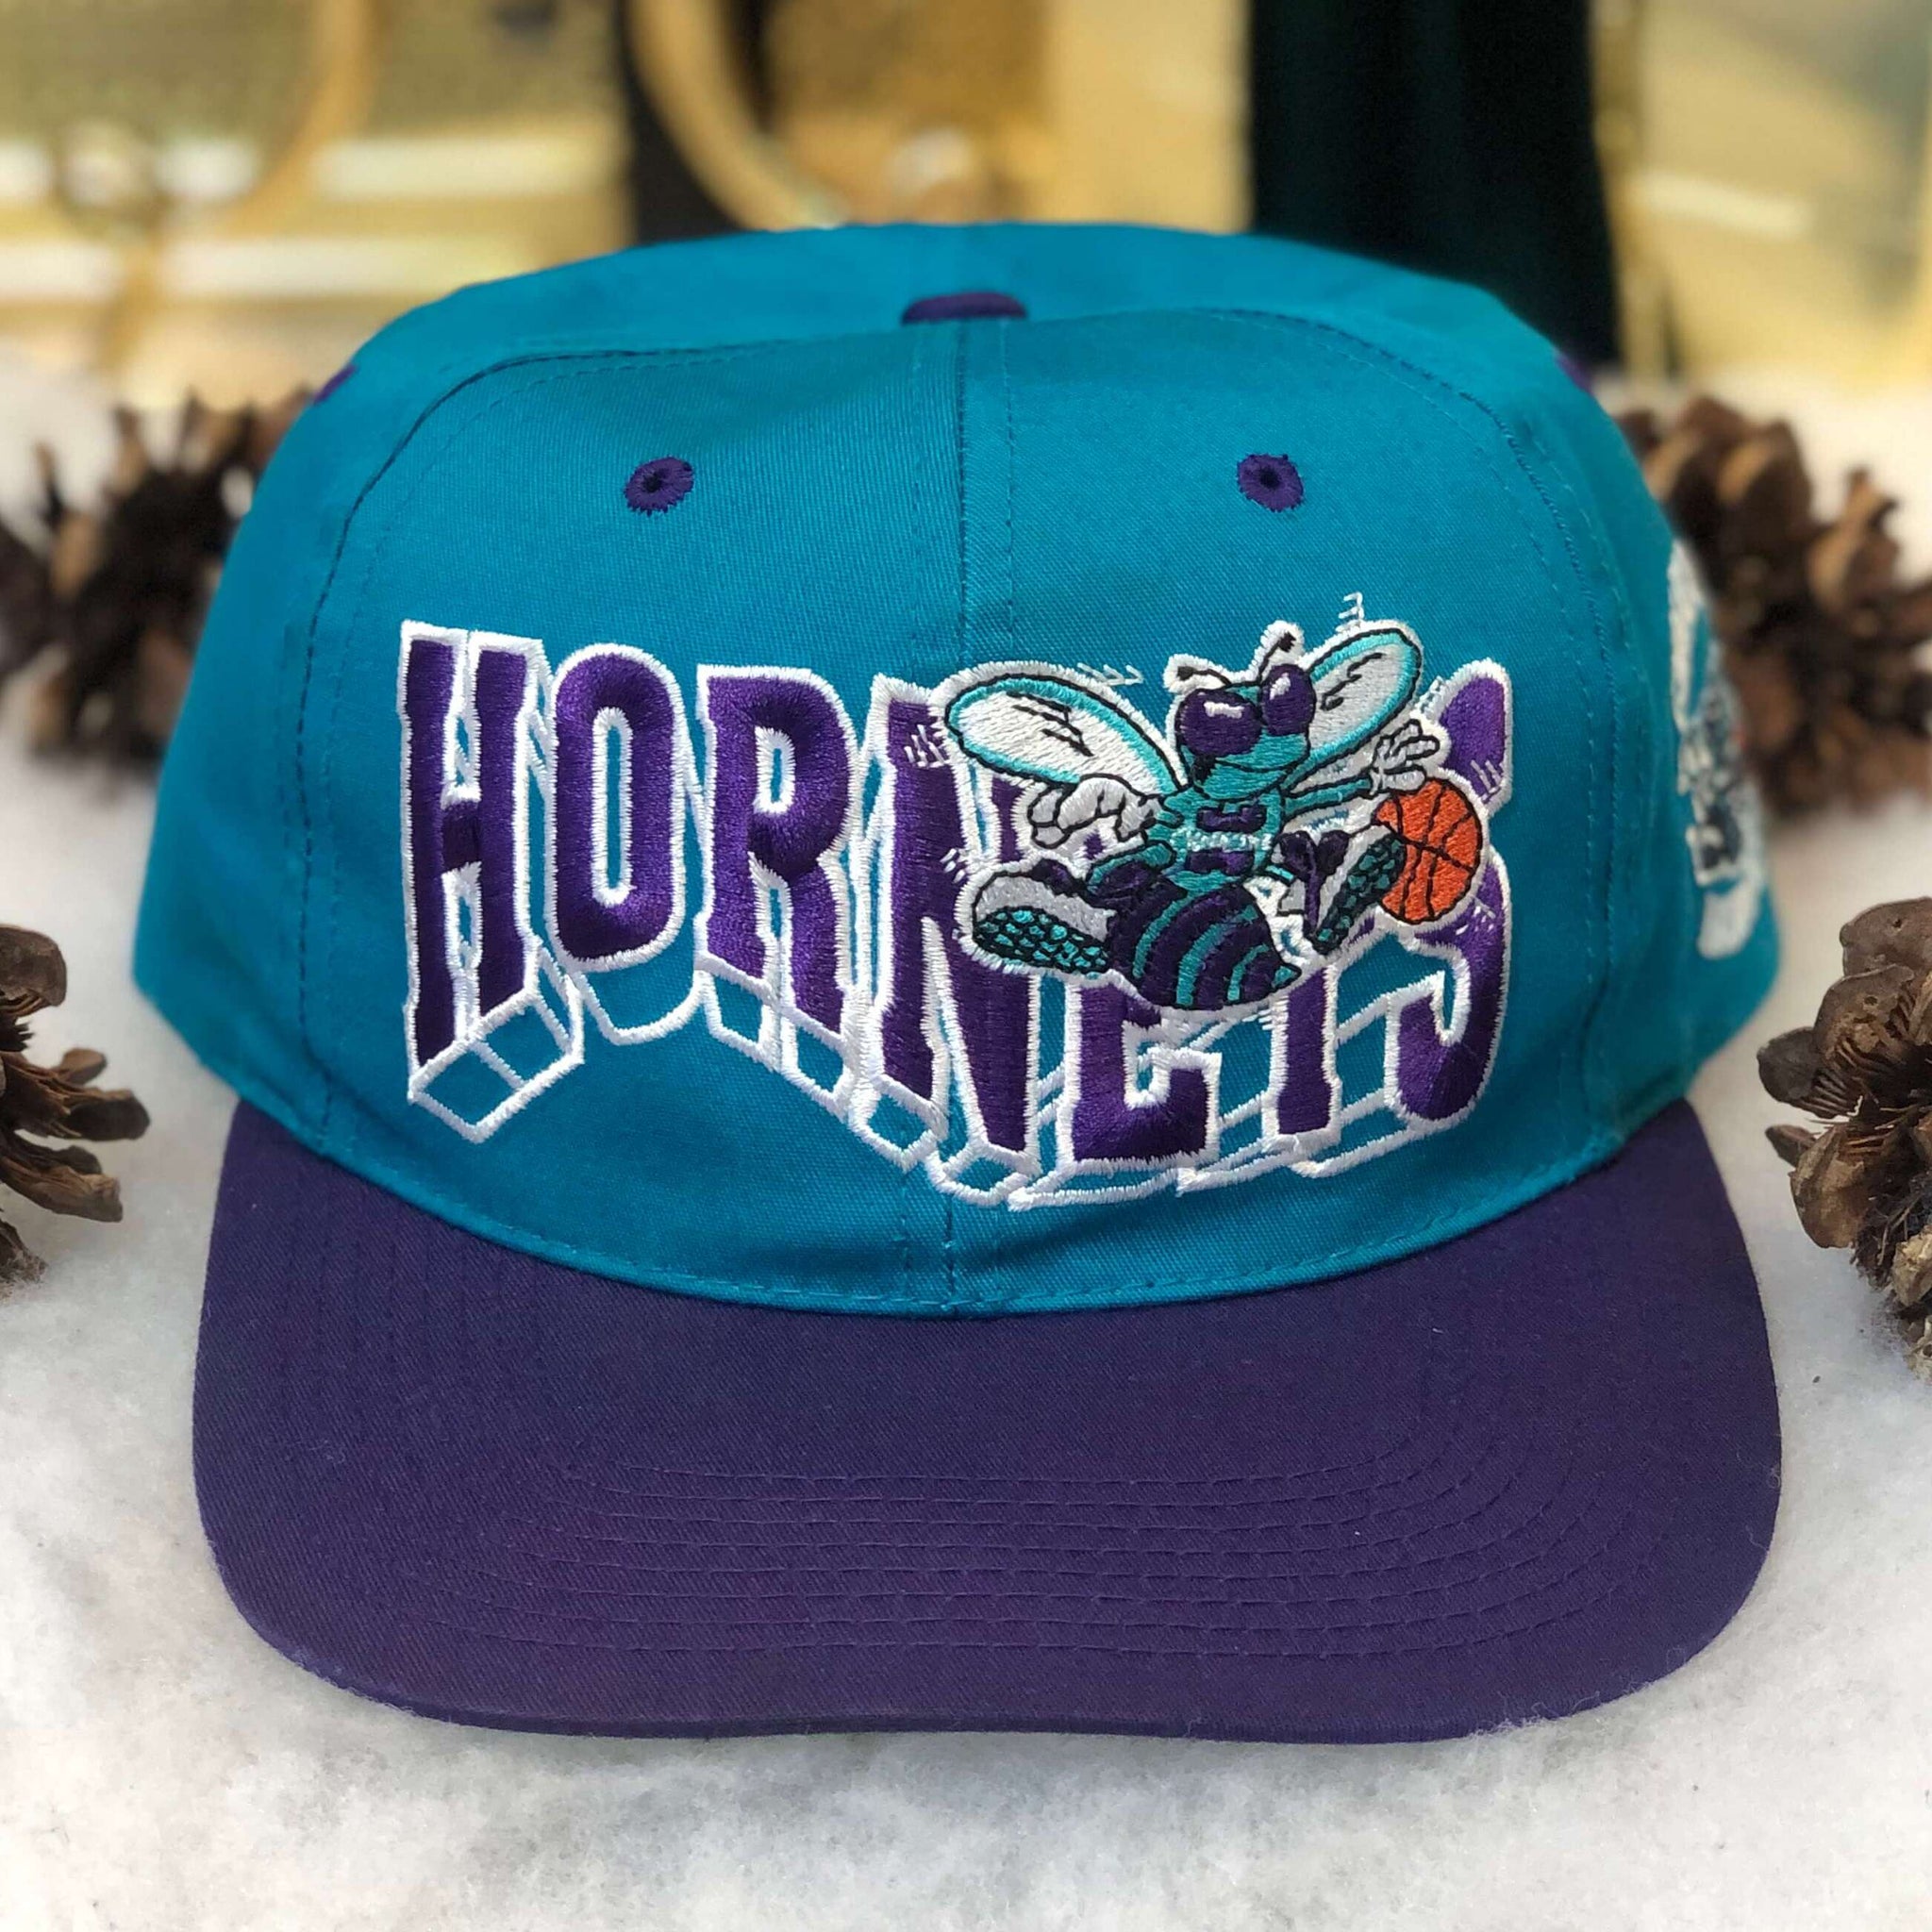 Vintage NBA Charlotte Hornets The G Cap Wave Twill Snapback Hat